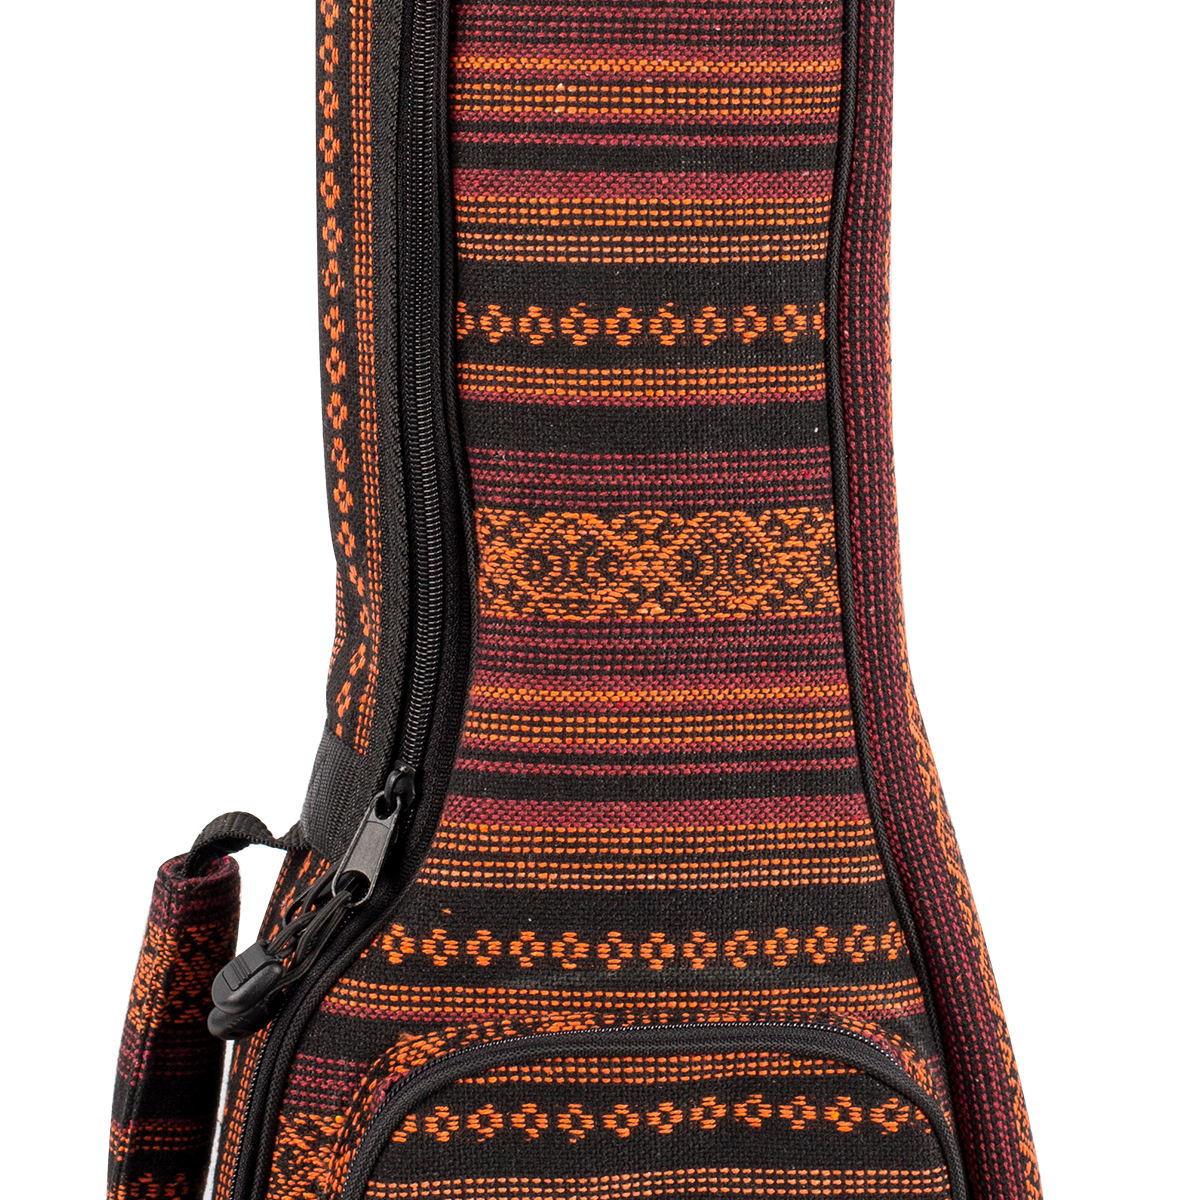 Concert Ukulele Bag - weave pattern fabric